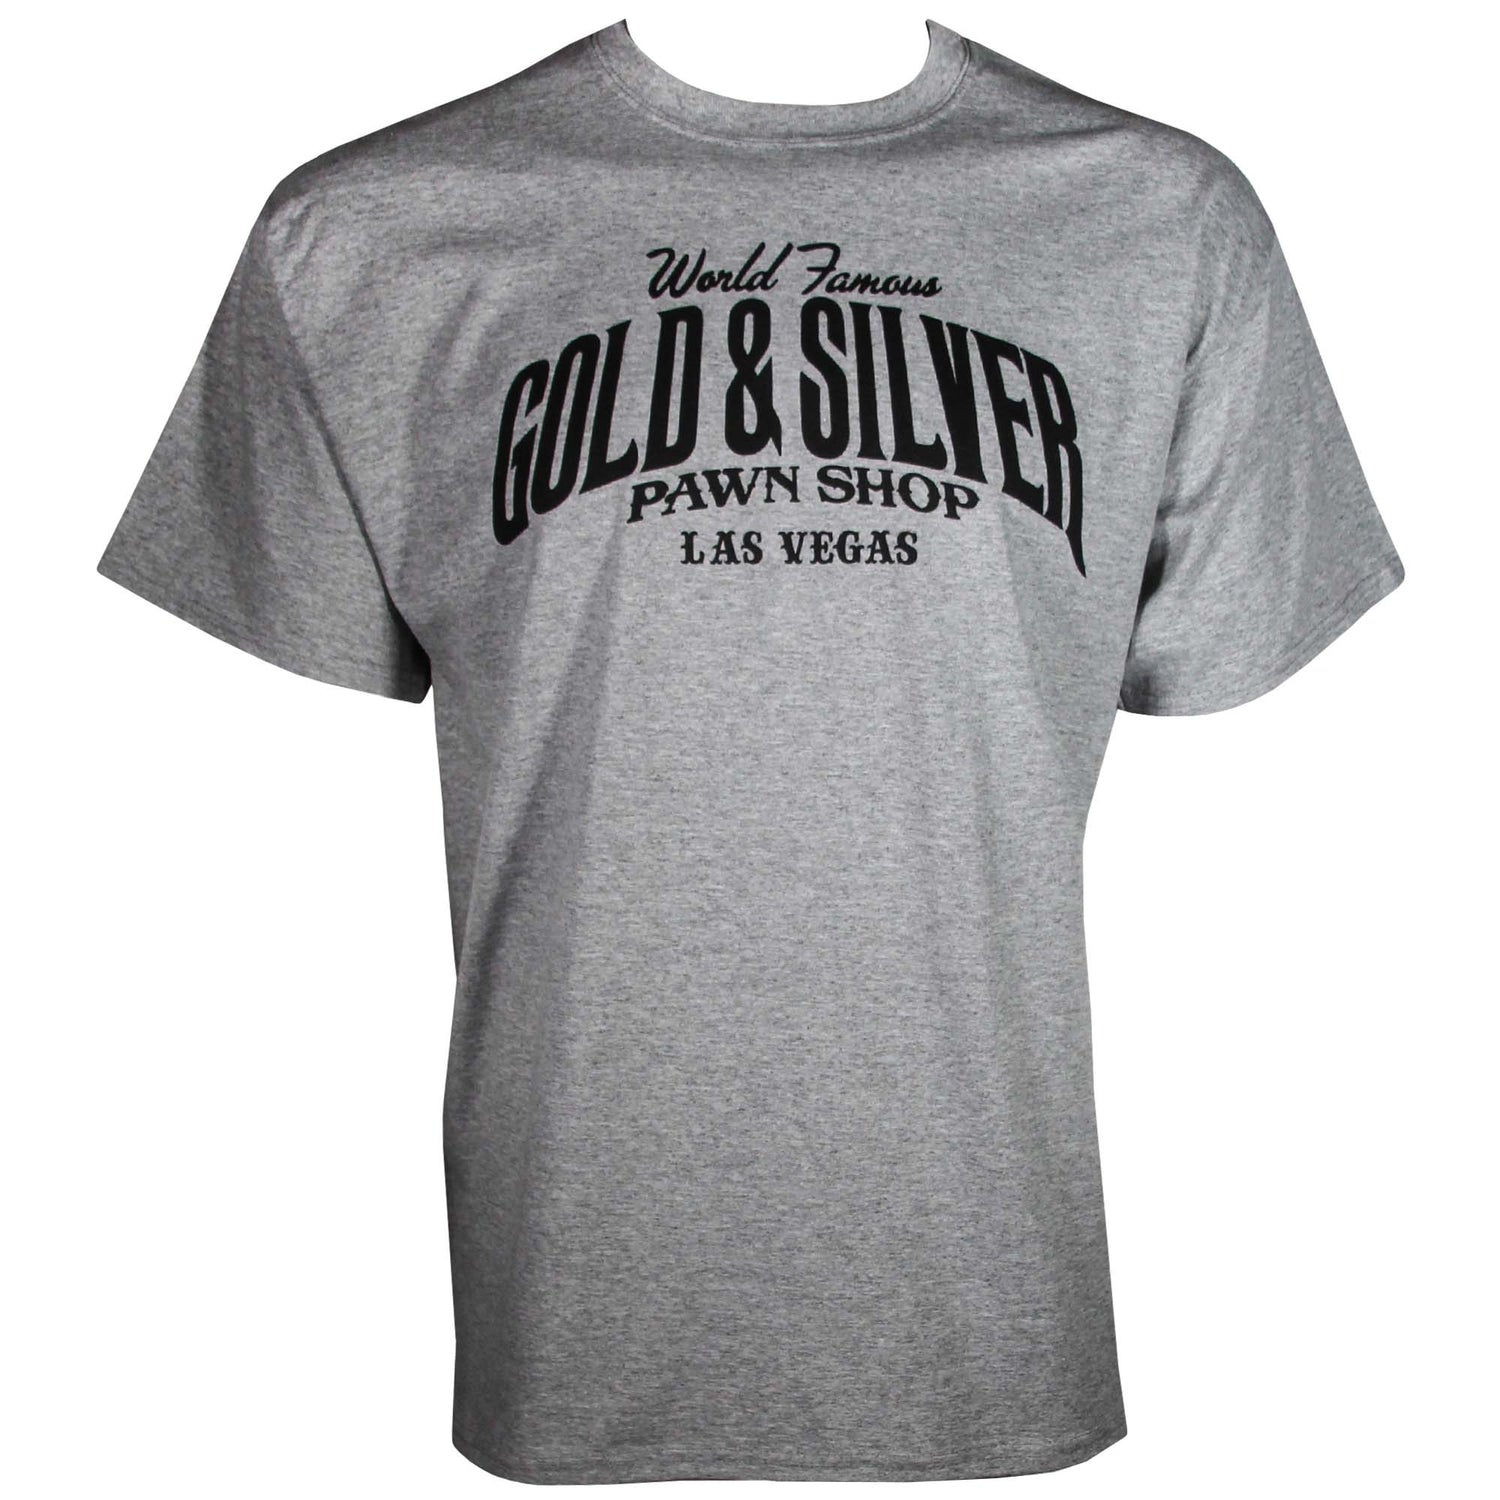 Gold & Silver Pawn Shop Round Neck Basic Short Sleeve T-Shirt Four